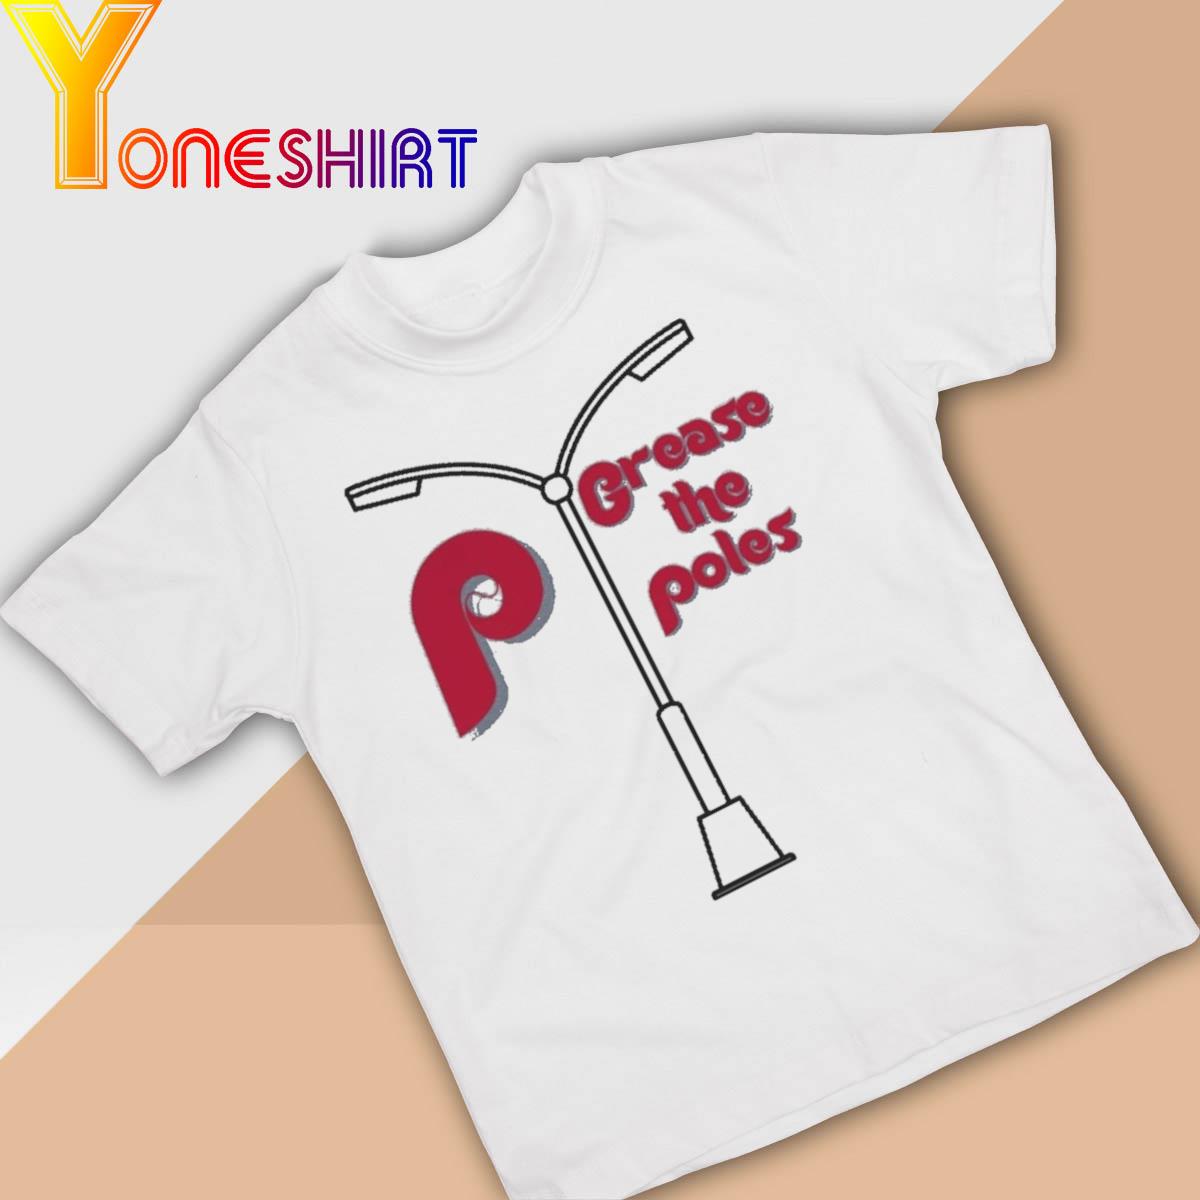 Philadelphia Phillies Baseball Grease the Poles shirt